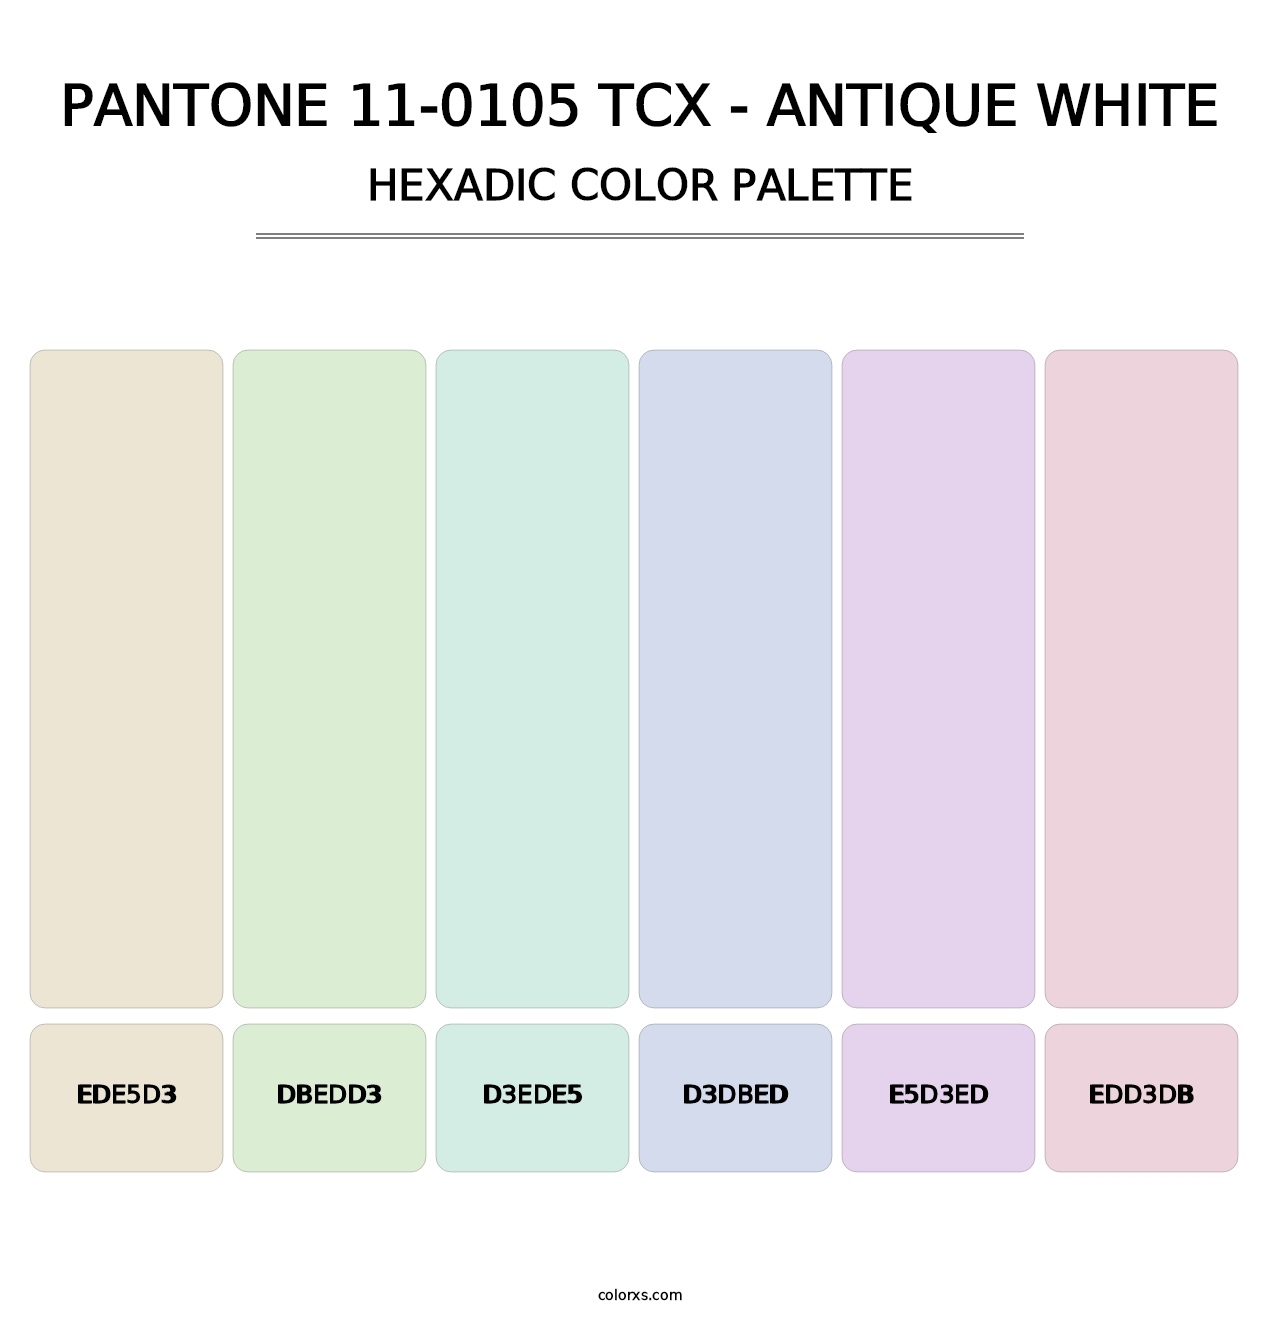 PANTONE 11-0105 TCX - Antique White - Hexadic Color Palette